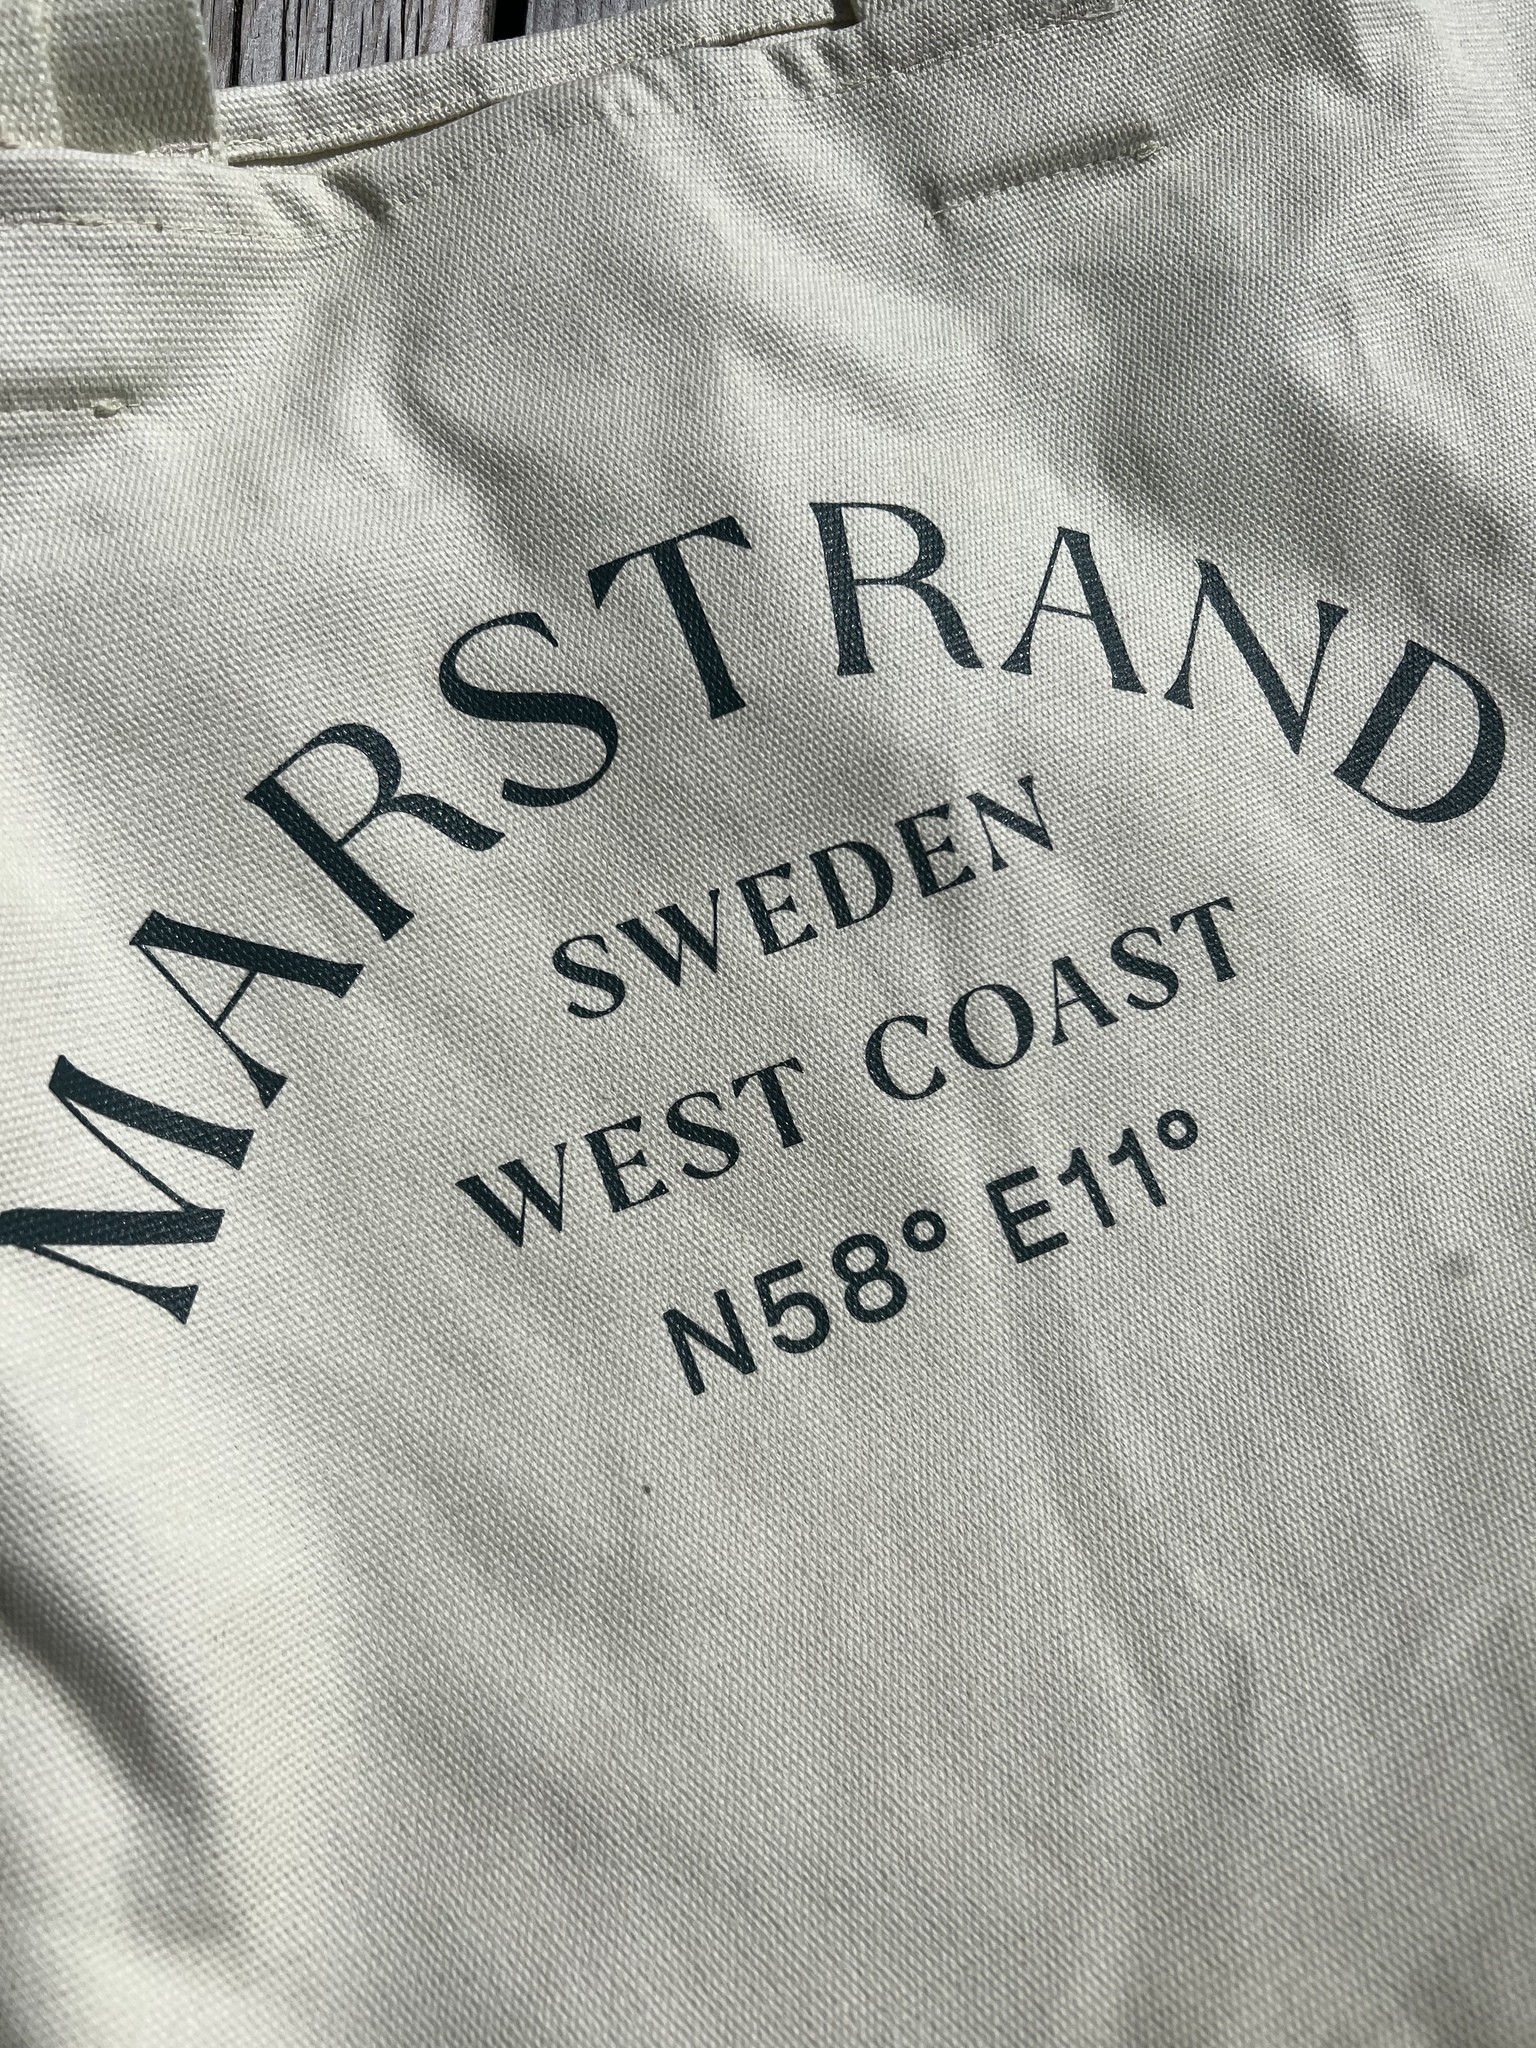 Marstrand - Canvas Beach Bag